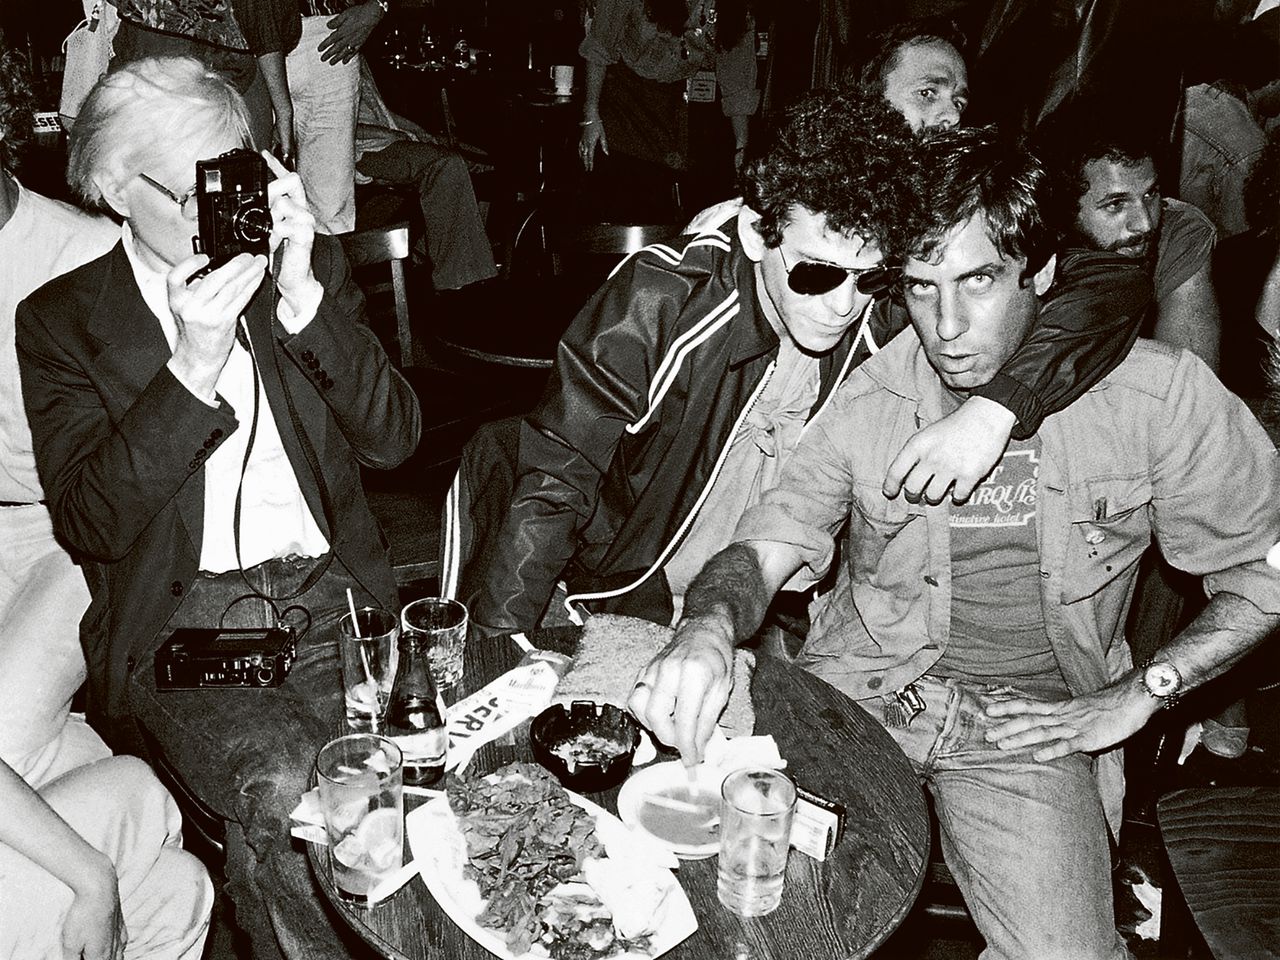 Uit de film ‘Danny Says’: Journalist, manager en rockersvriendDanny Fields (rechts) metAndy Warhol (links) enLou Reed (midden).